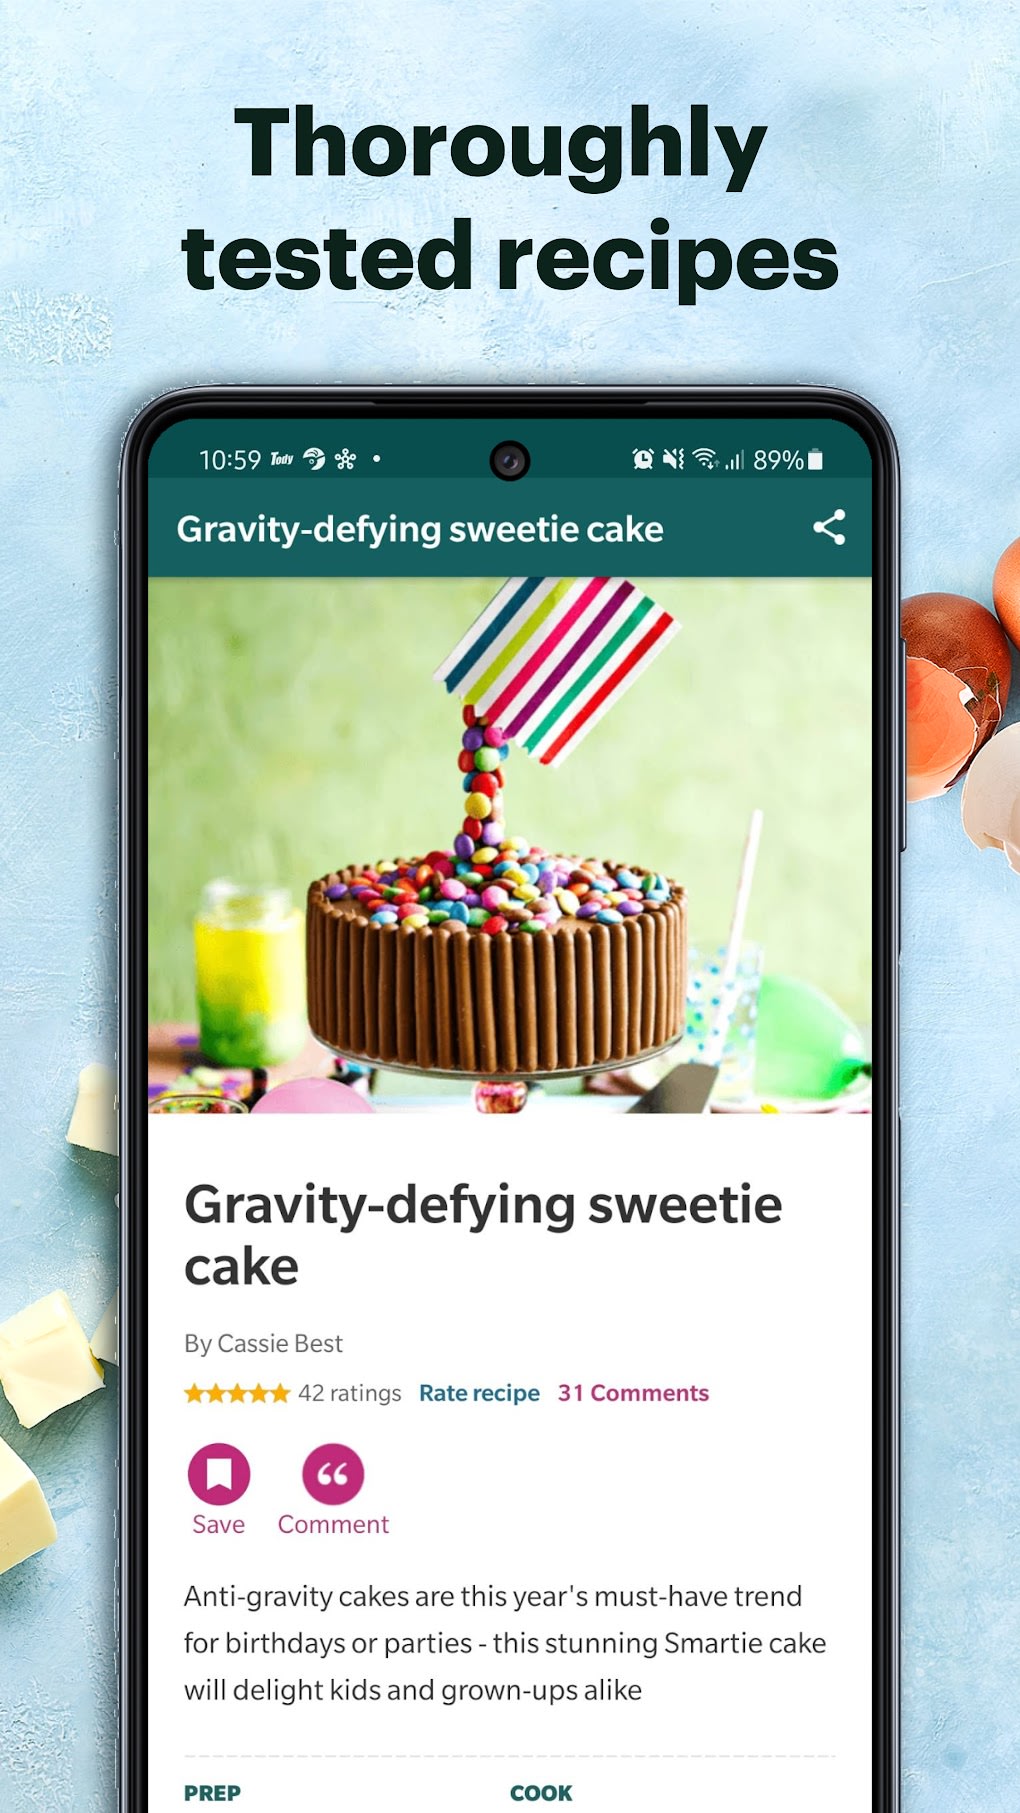 Gravity-defying sweetie cake recipe